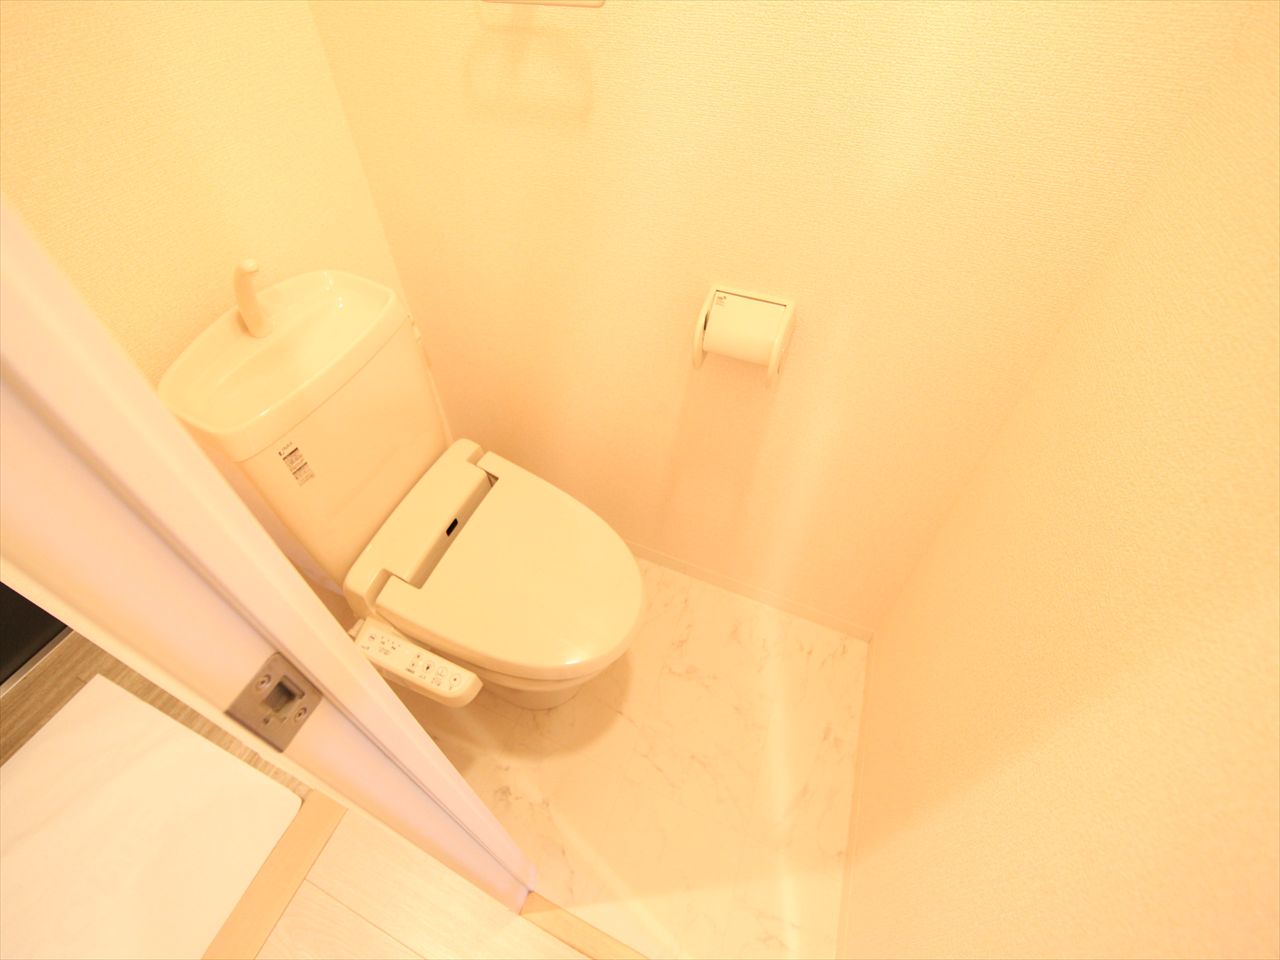 Toilet. bus ・ Restroom Warm water washing heating toilet seat